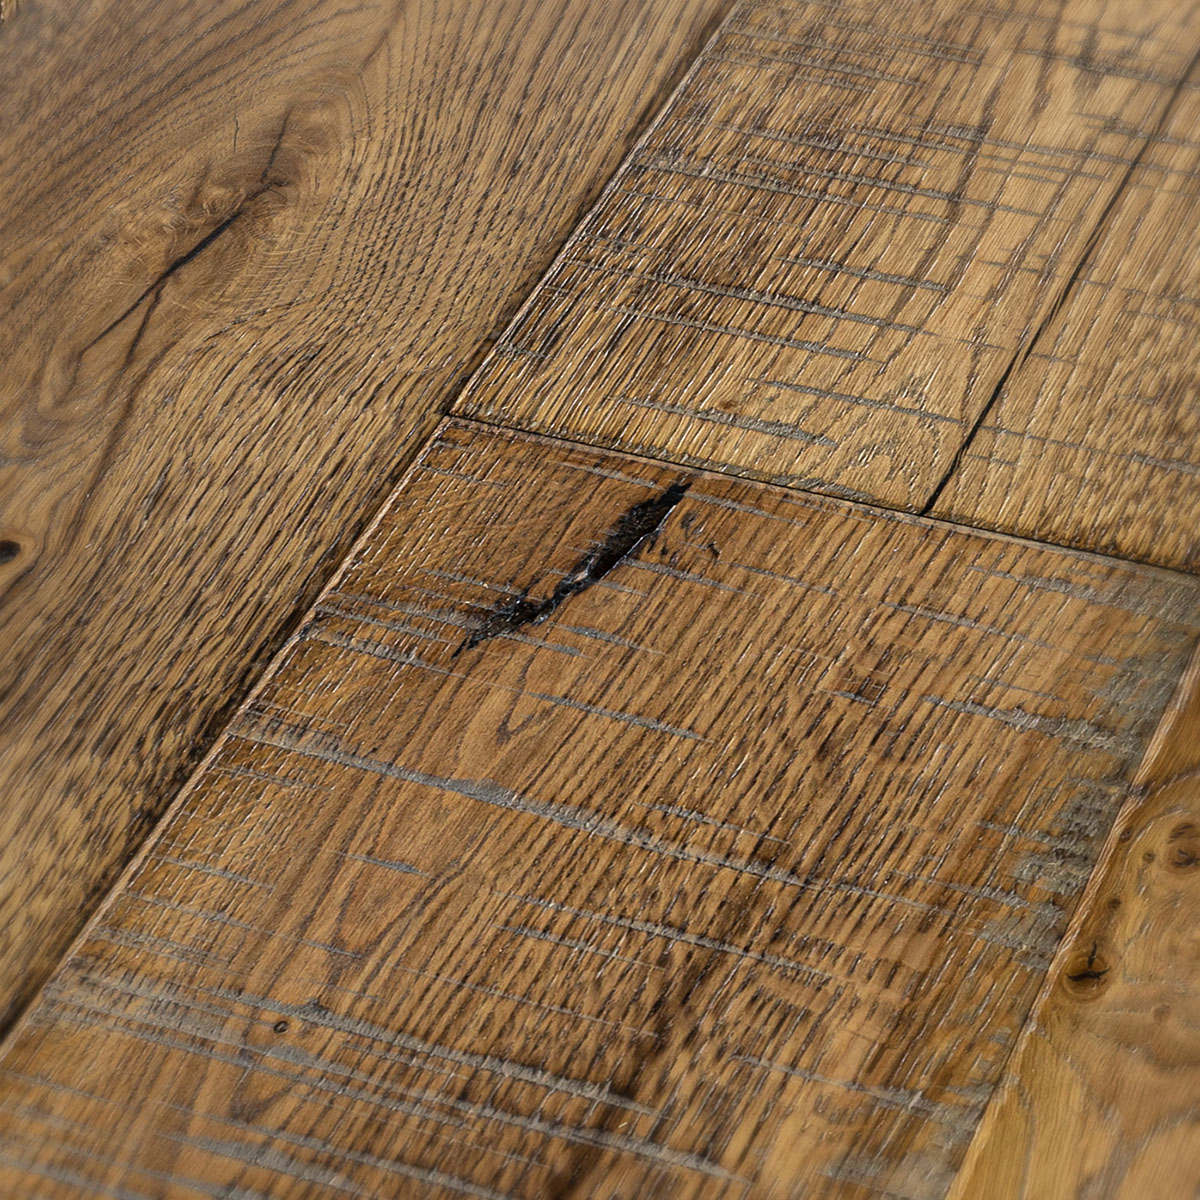 Springslade - Cobbled Edged Rustic Grade Oak Floor